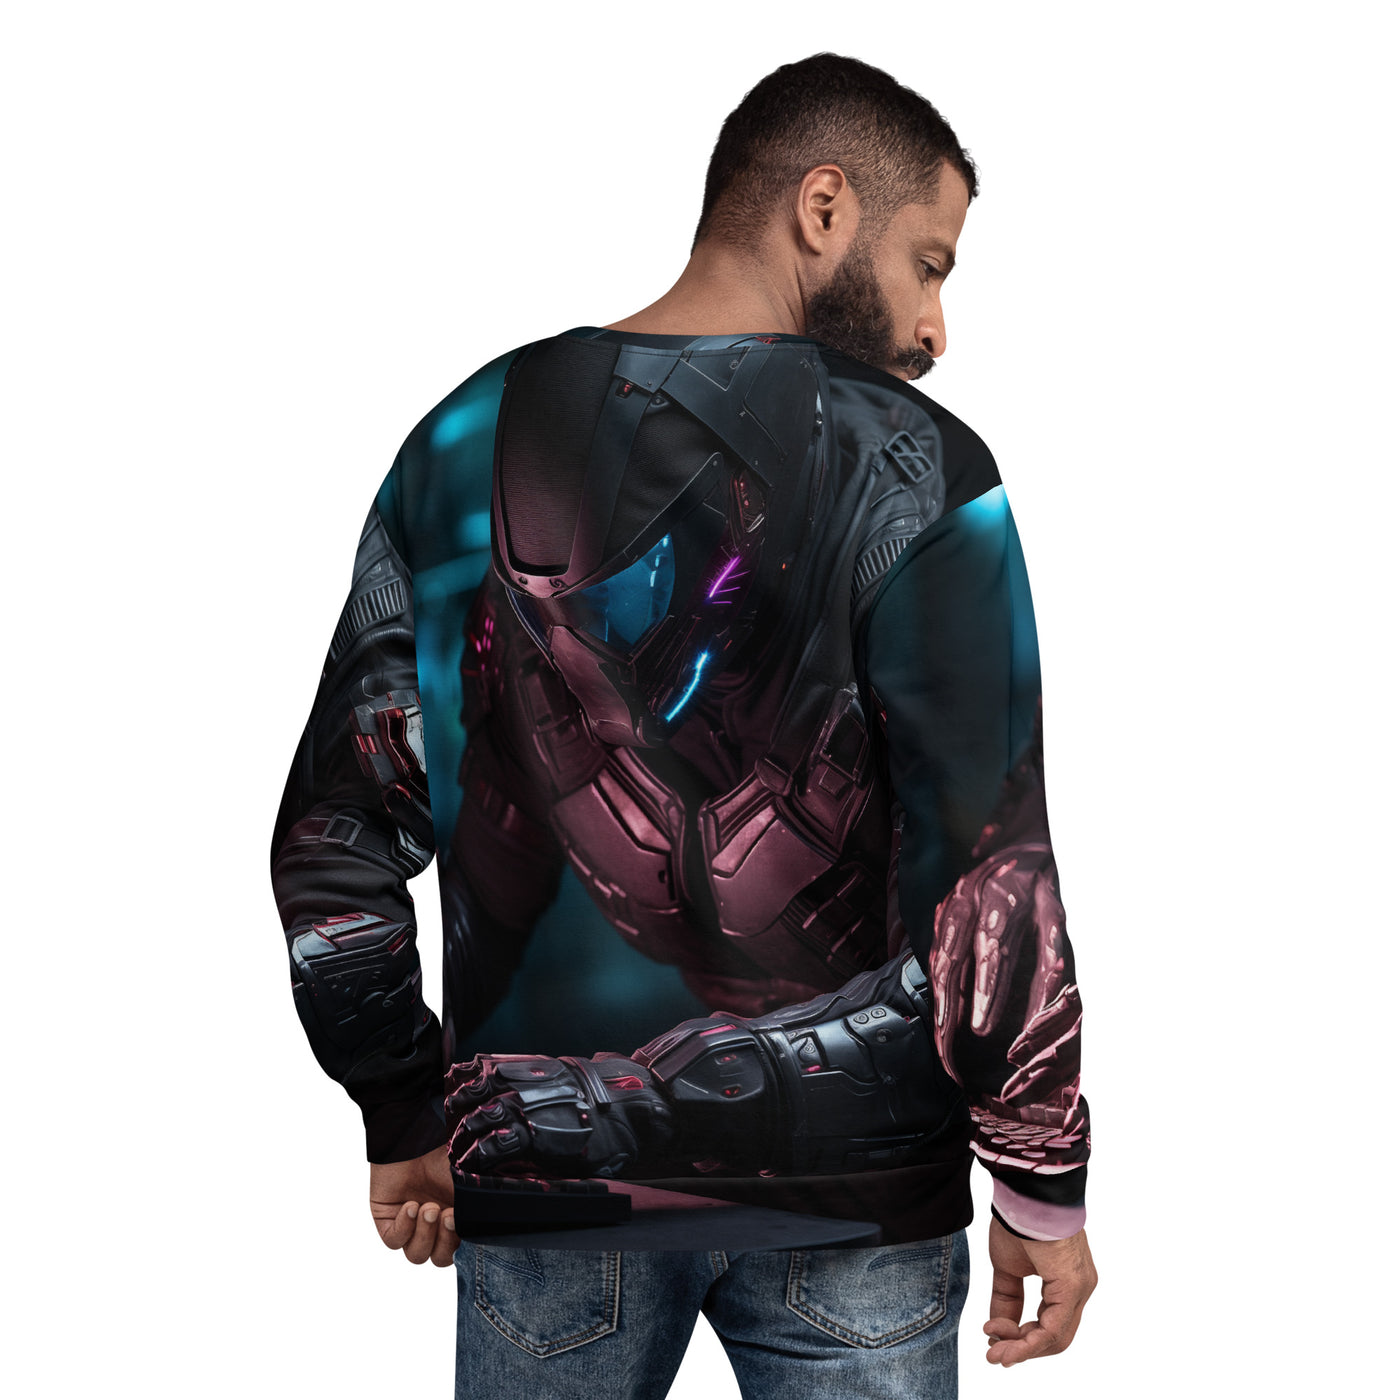 CyberArms Warrior v23 - Unisex Sweatshirt